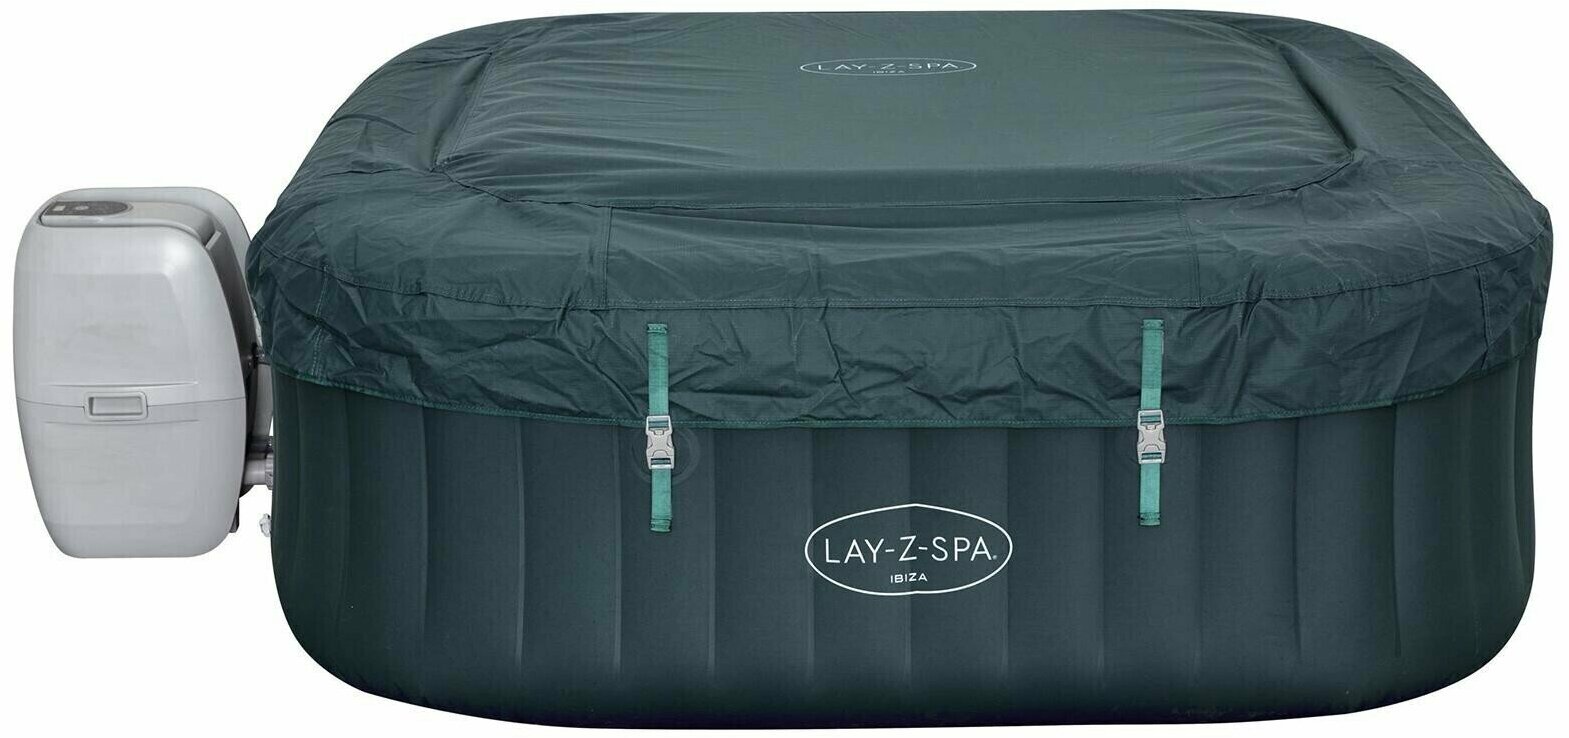 Bestway Надувной бассейн-джакузи Lay-Z-Spa: Ibiza 180*180*66 см, аэромассаж, аксессуары 60015